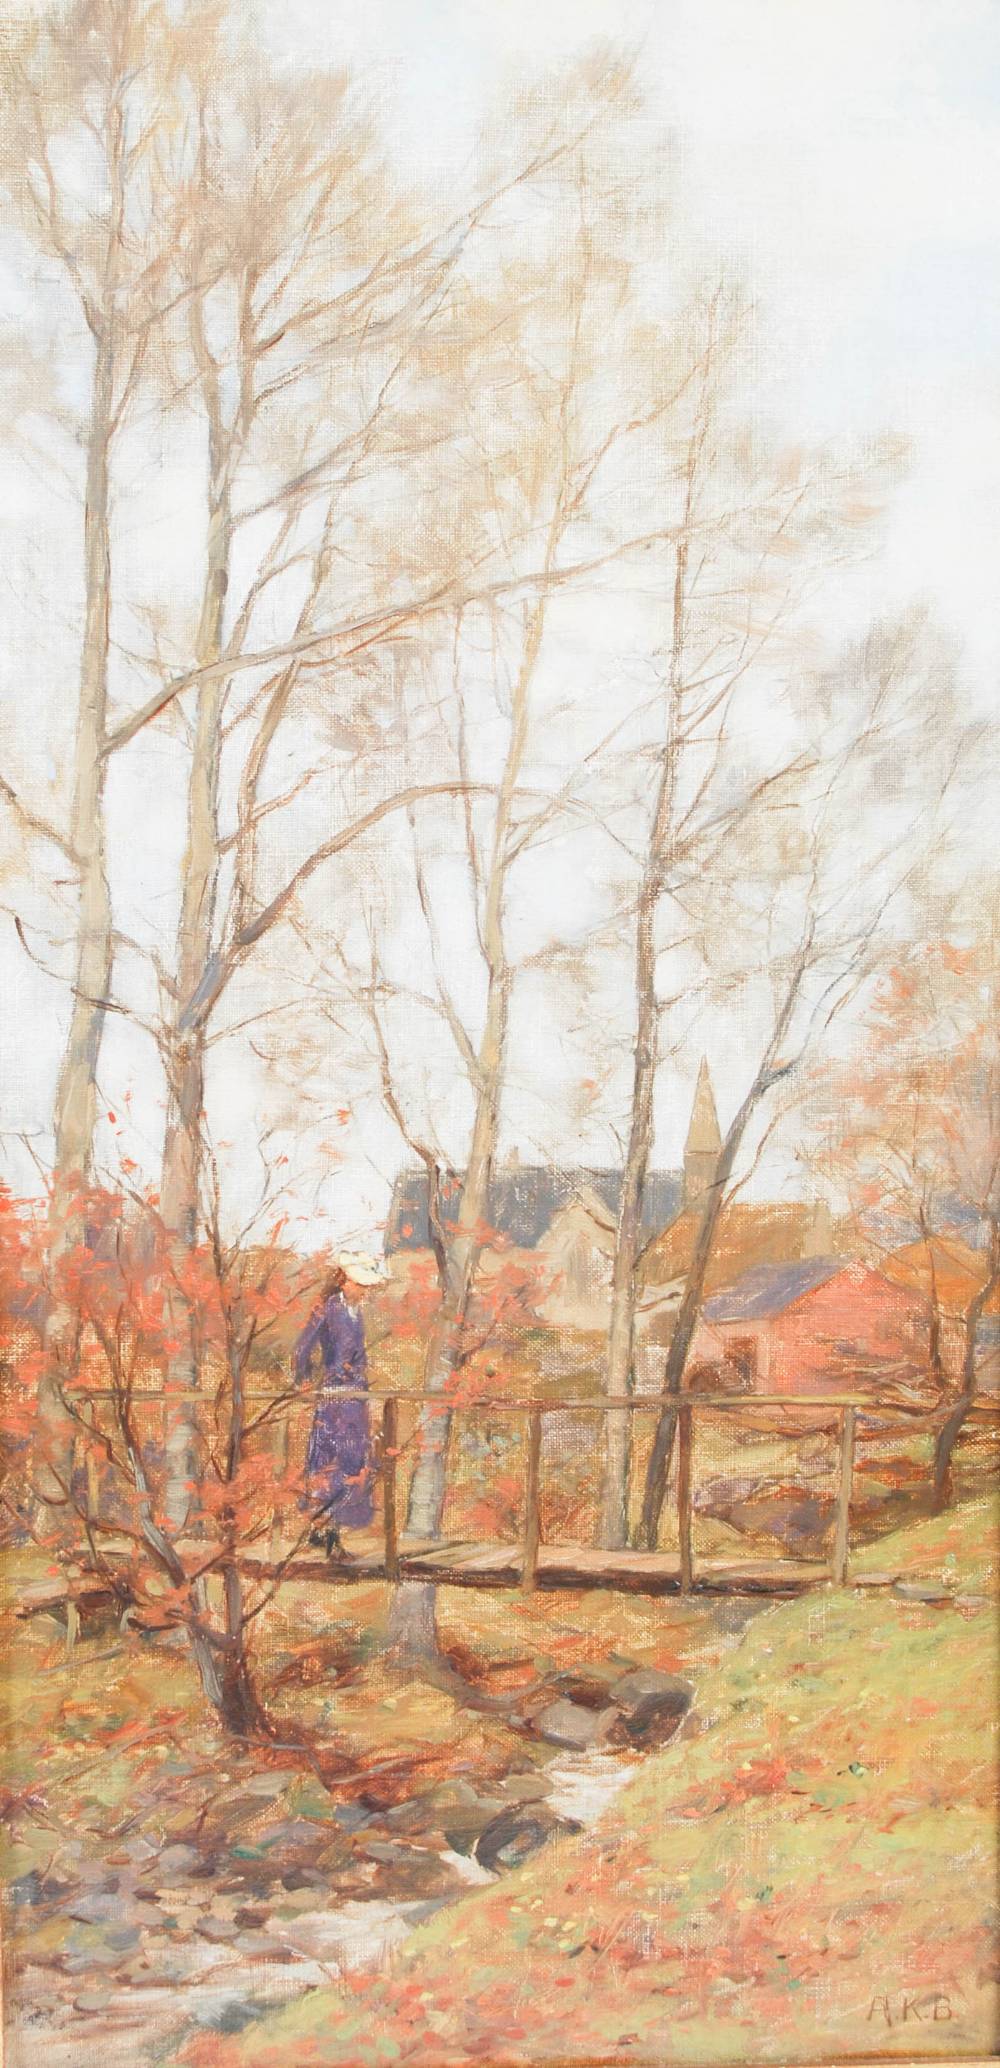 Alexander Kellock Brown RSA RSW RI (1849-1922) Autumnal garden with girl crossing a bridge oil on